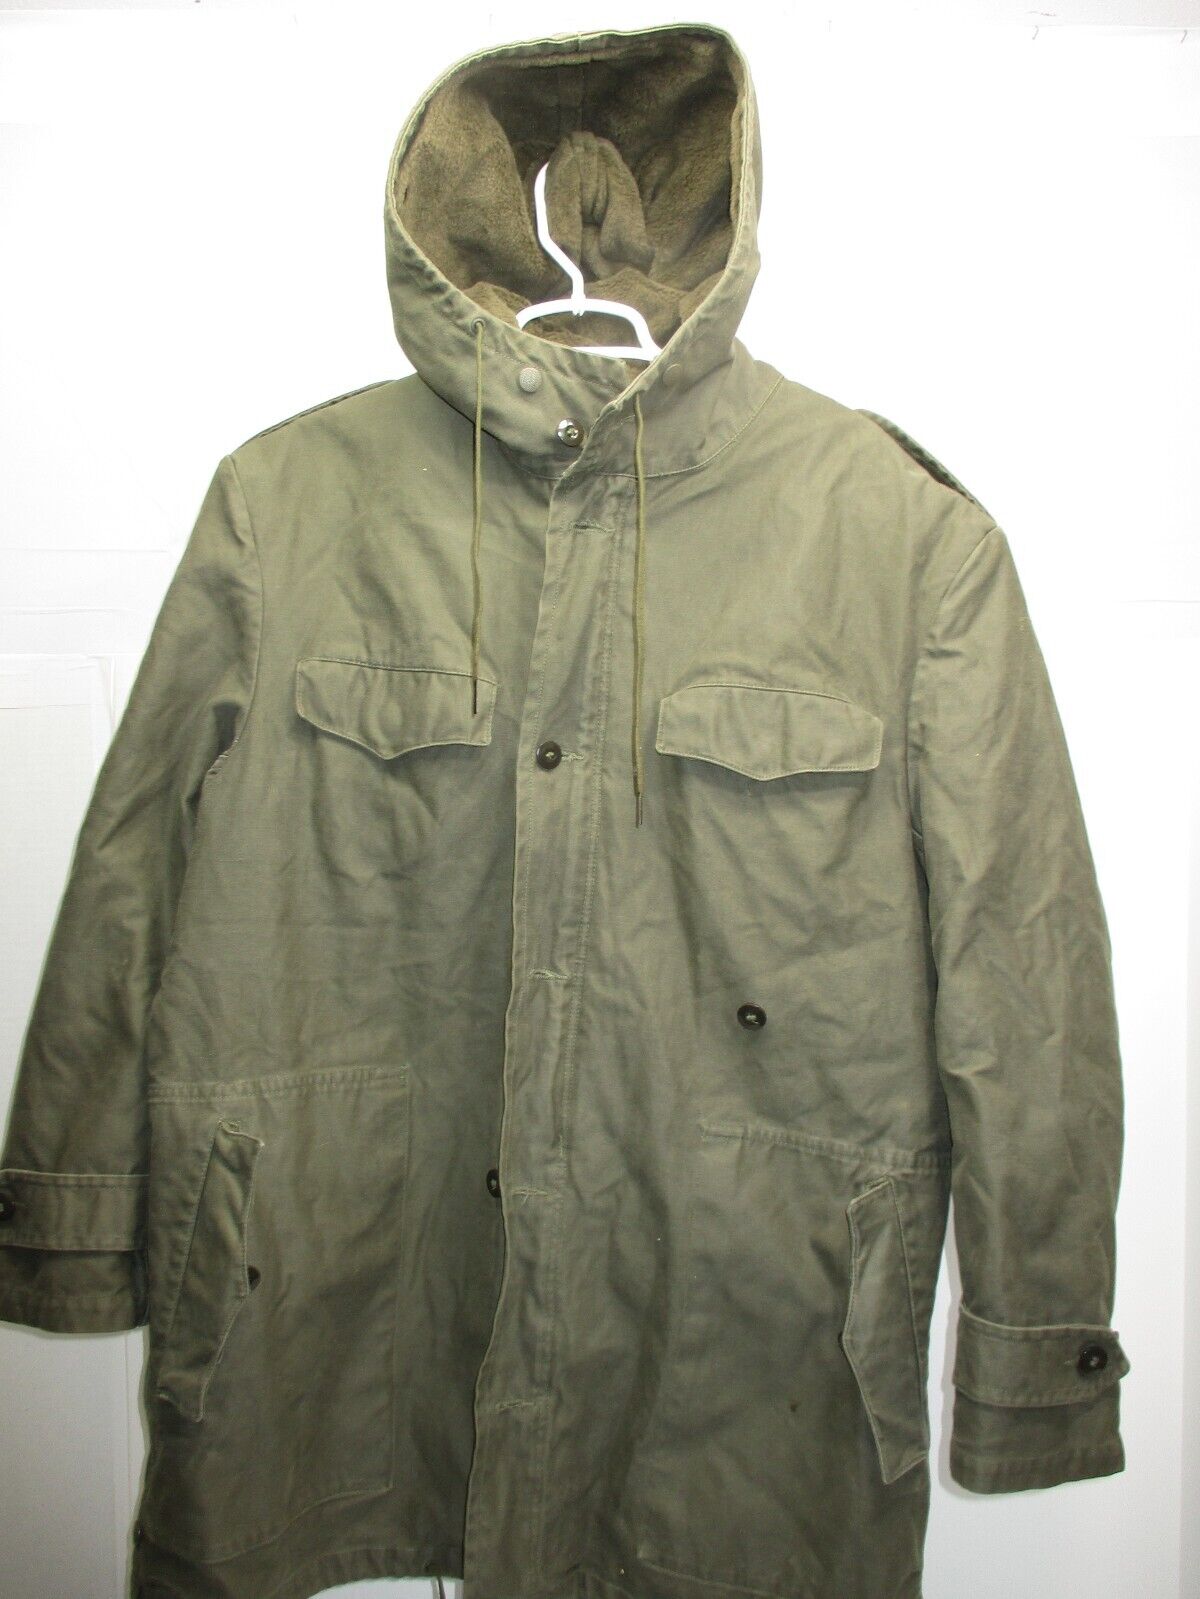 Scharrer Untergriesbach Military Parka Jacket fleece lined vintage 1989